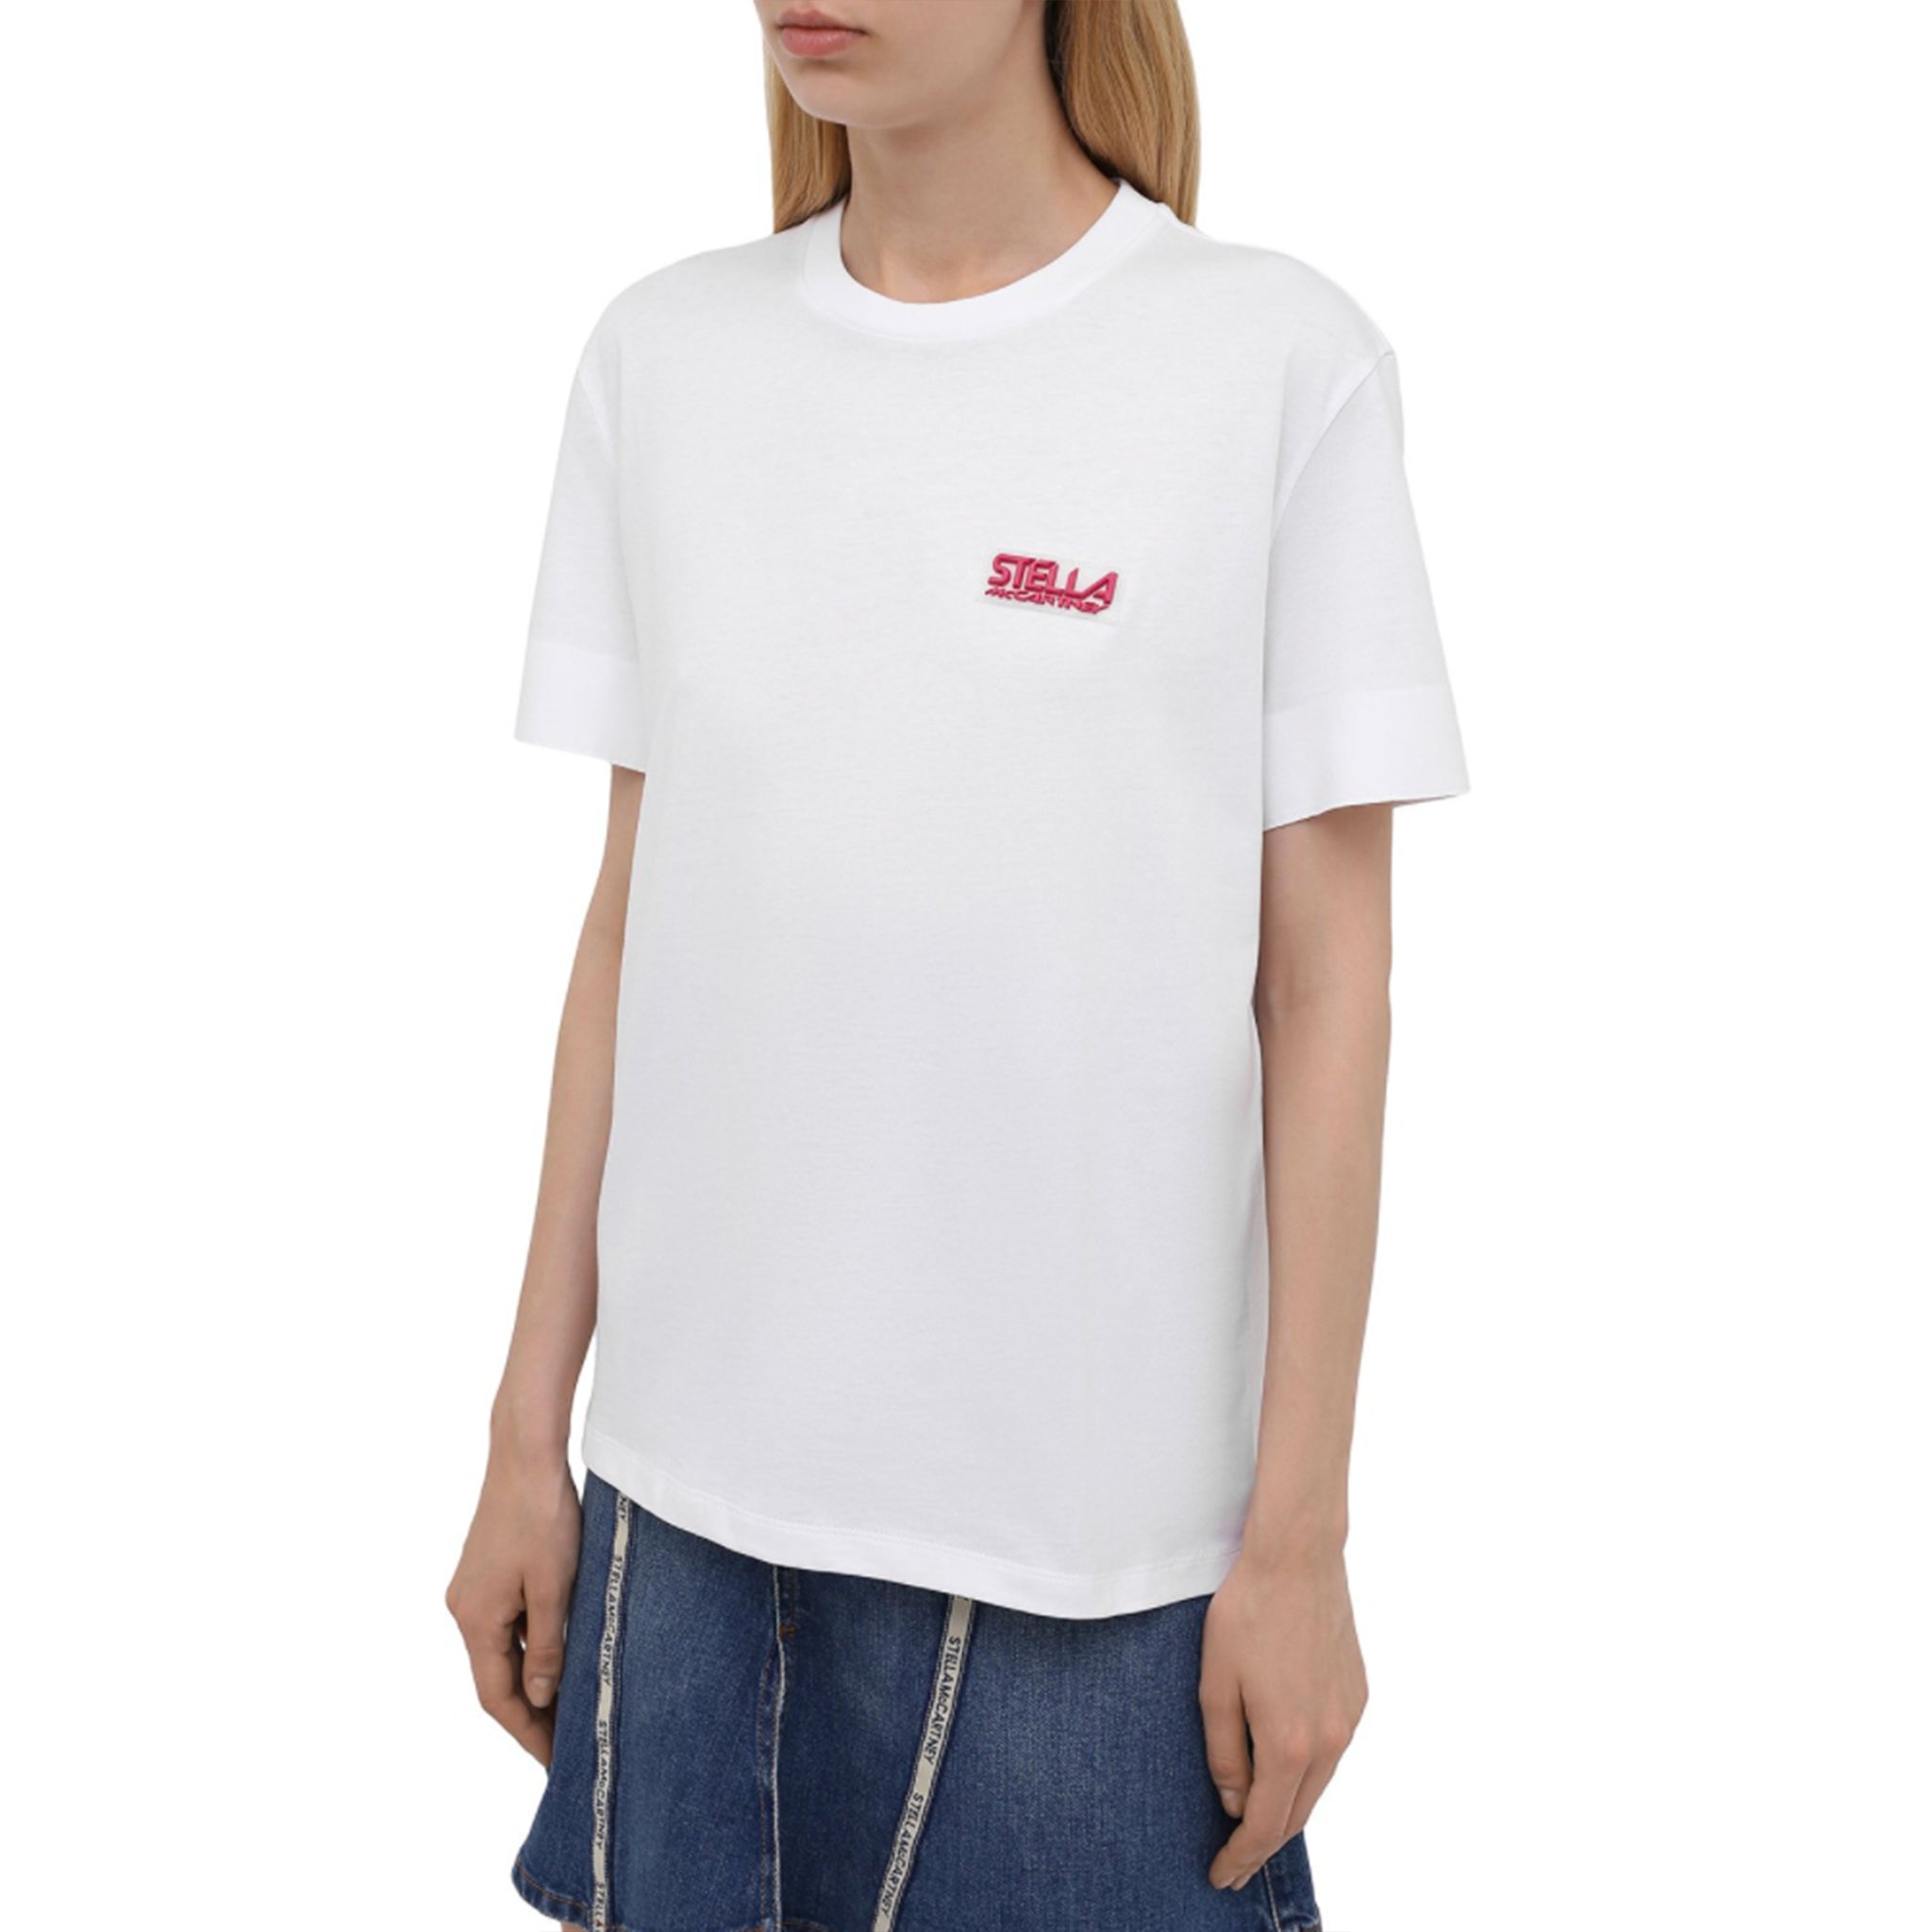 STELLA-MCCARTNEY-OUTLET-SALE-Stella-Mccartney-Cotton-Logo-T-Shirt-Shirts-ARCHIVE-COLLECTION-2.jpg